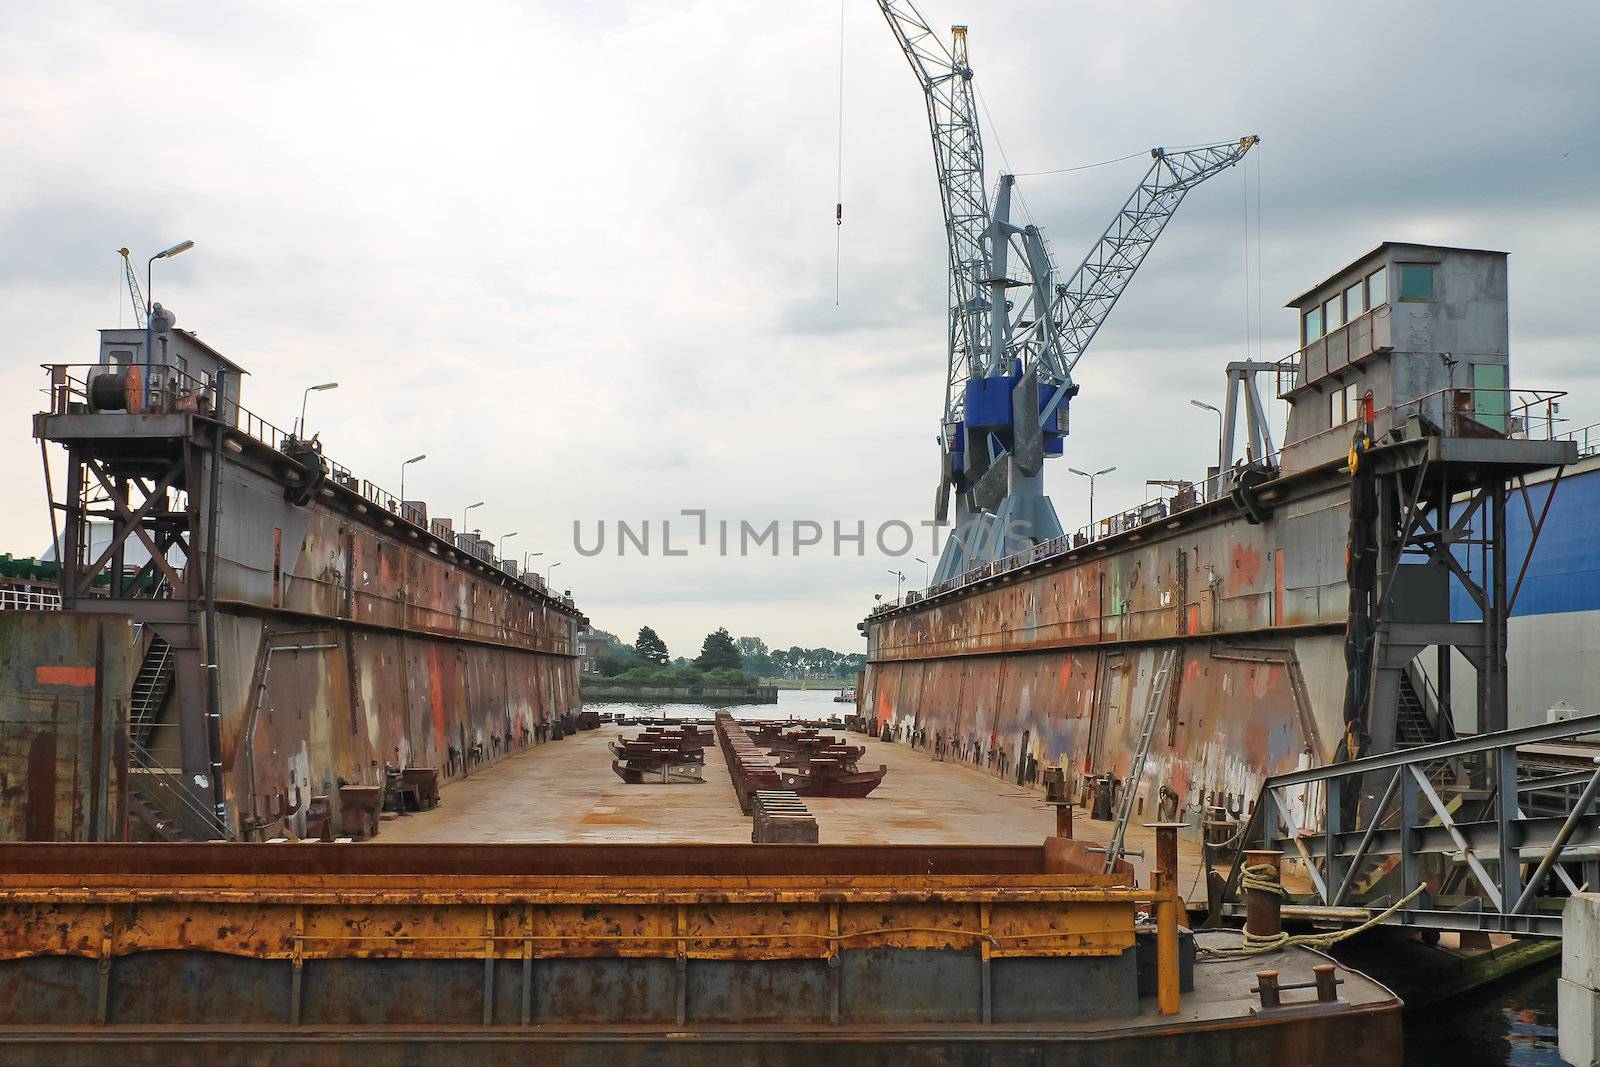 Empty dry dock at the shipyard, the Netherlands by NickNick